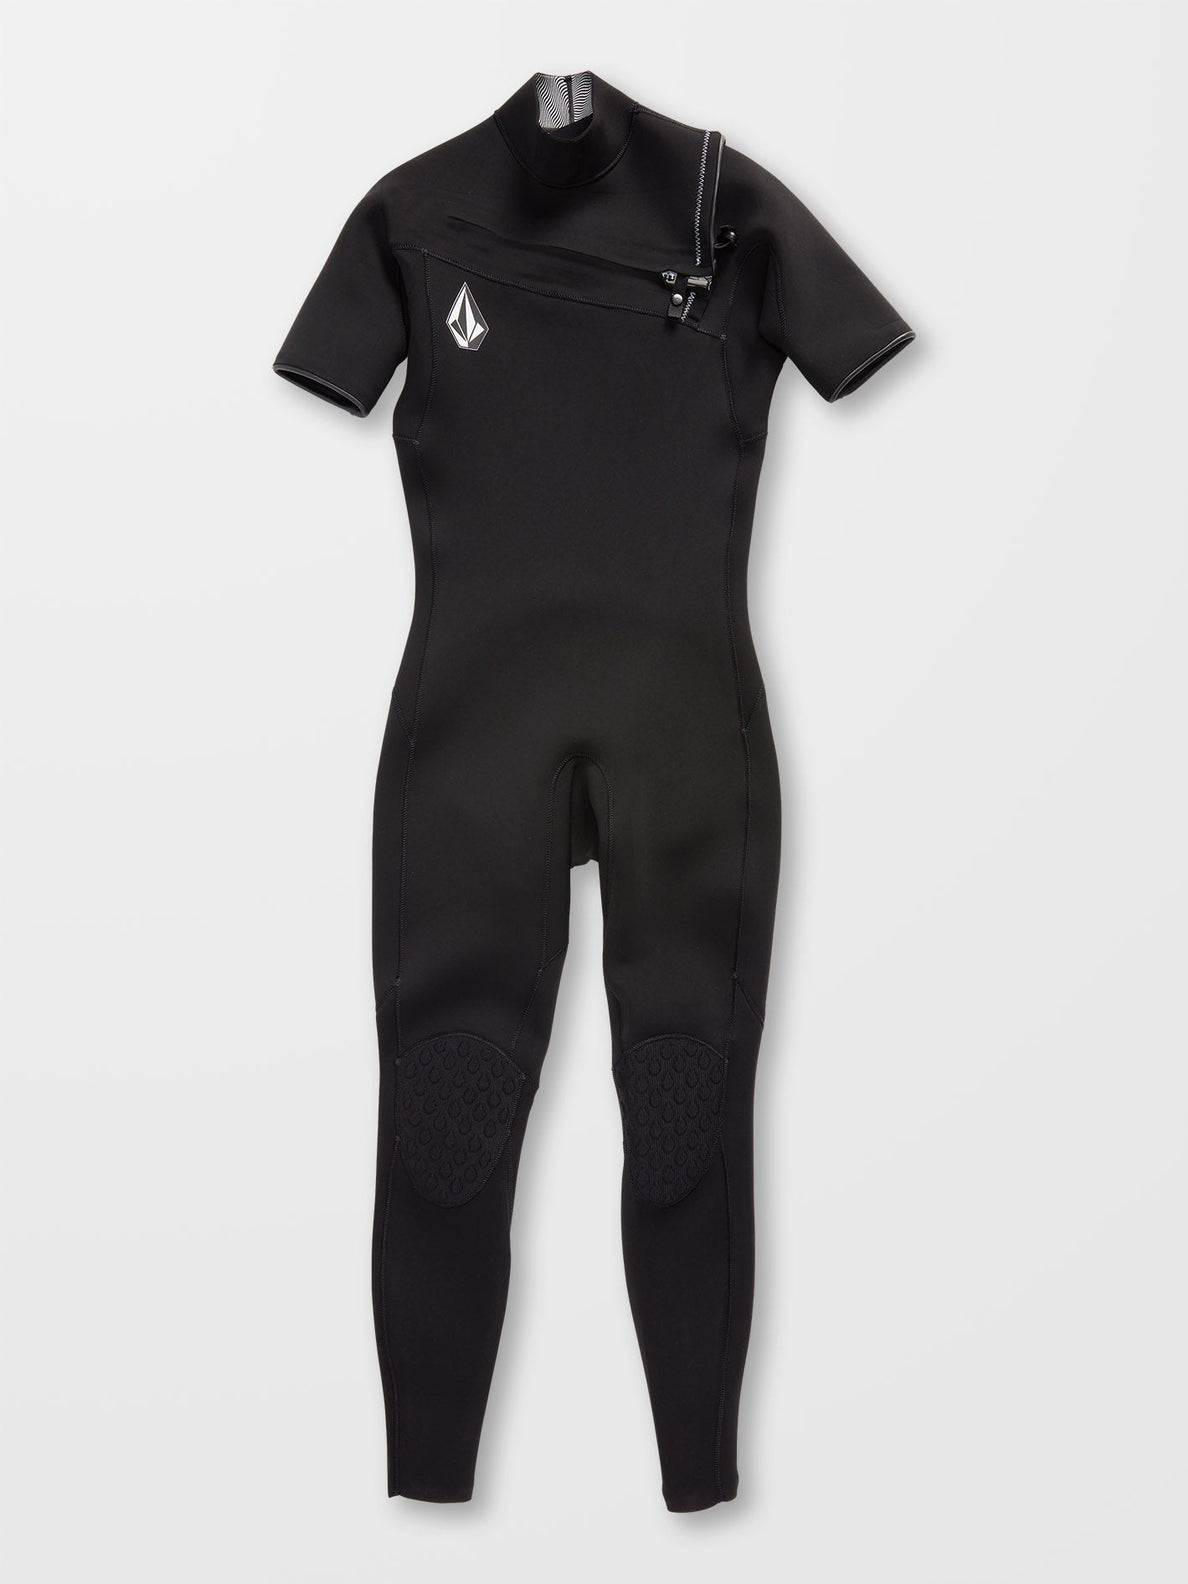 2/2Mm Short Sleeve Full Wetsuit - BLACK (A9532201_BLK) [42]